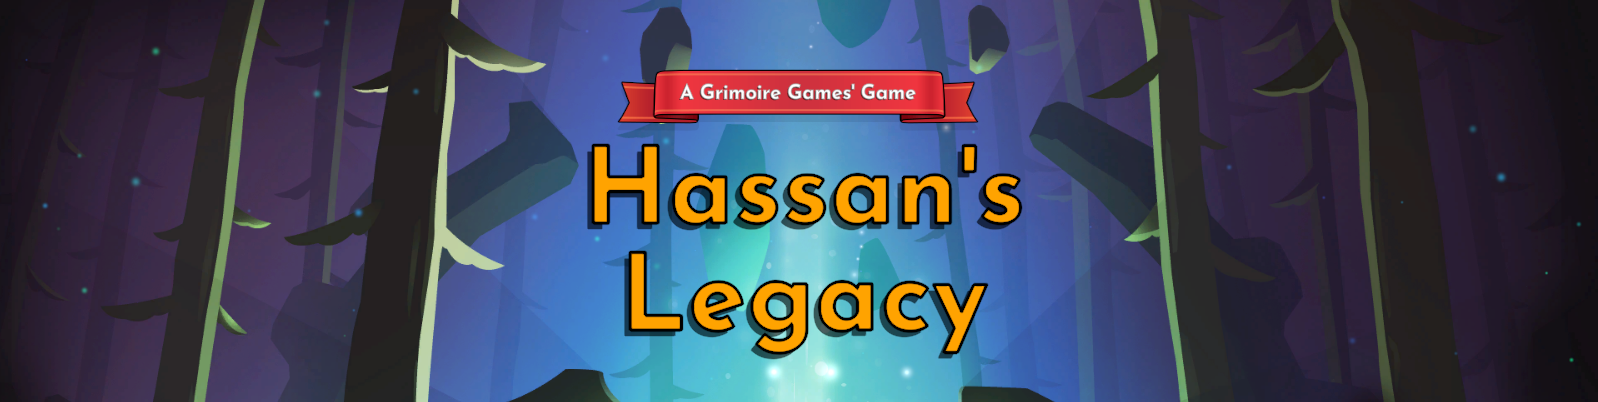 Hassan's Legacy